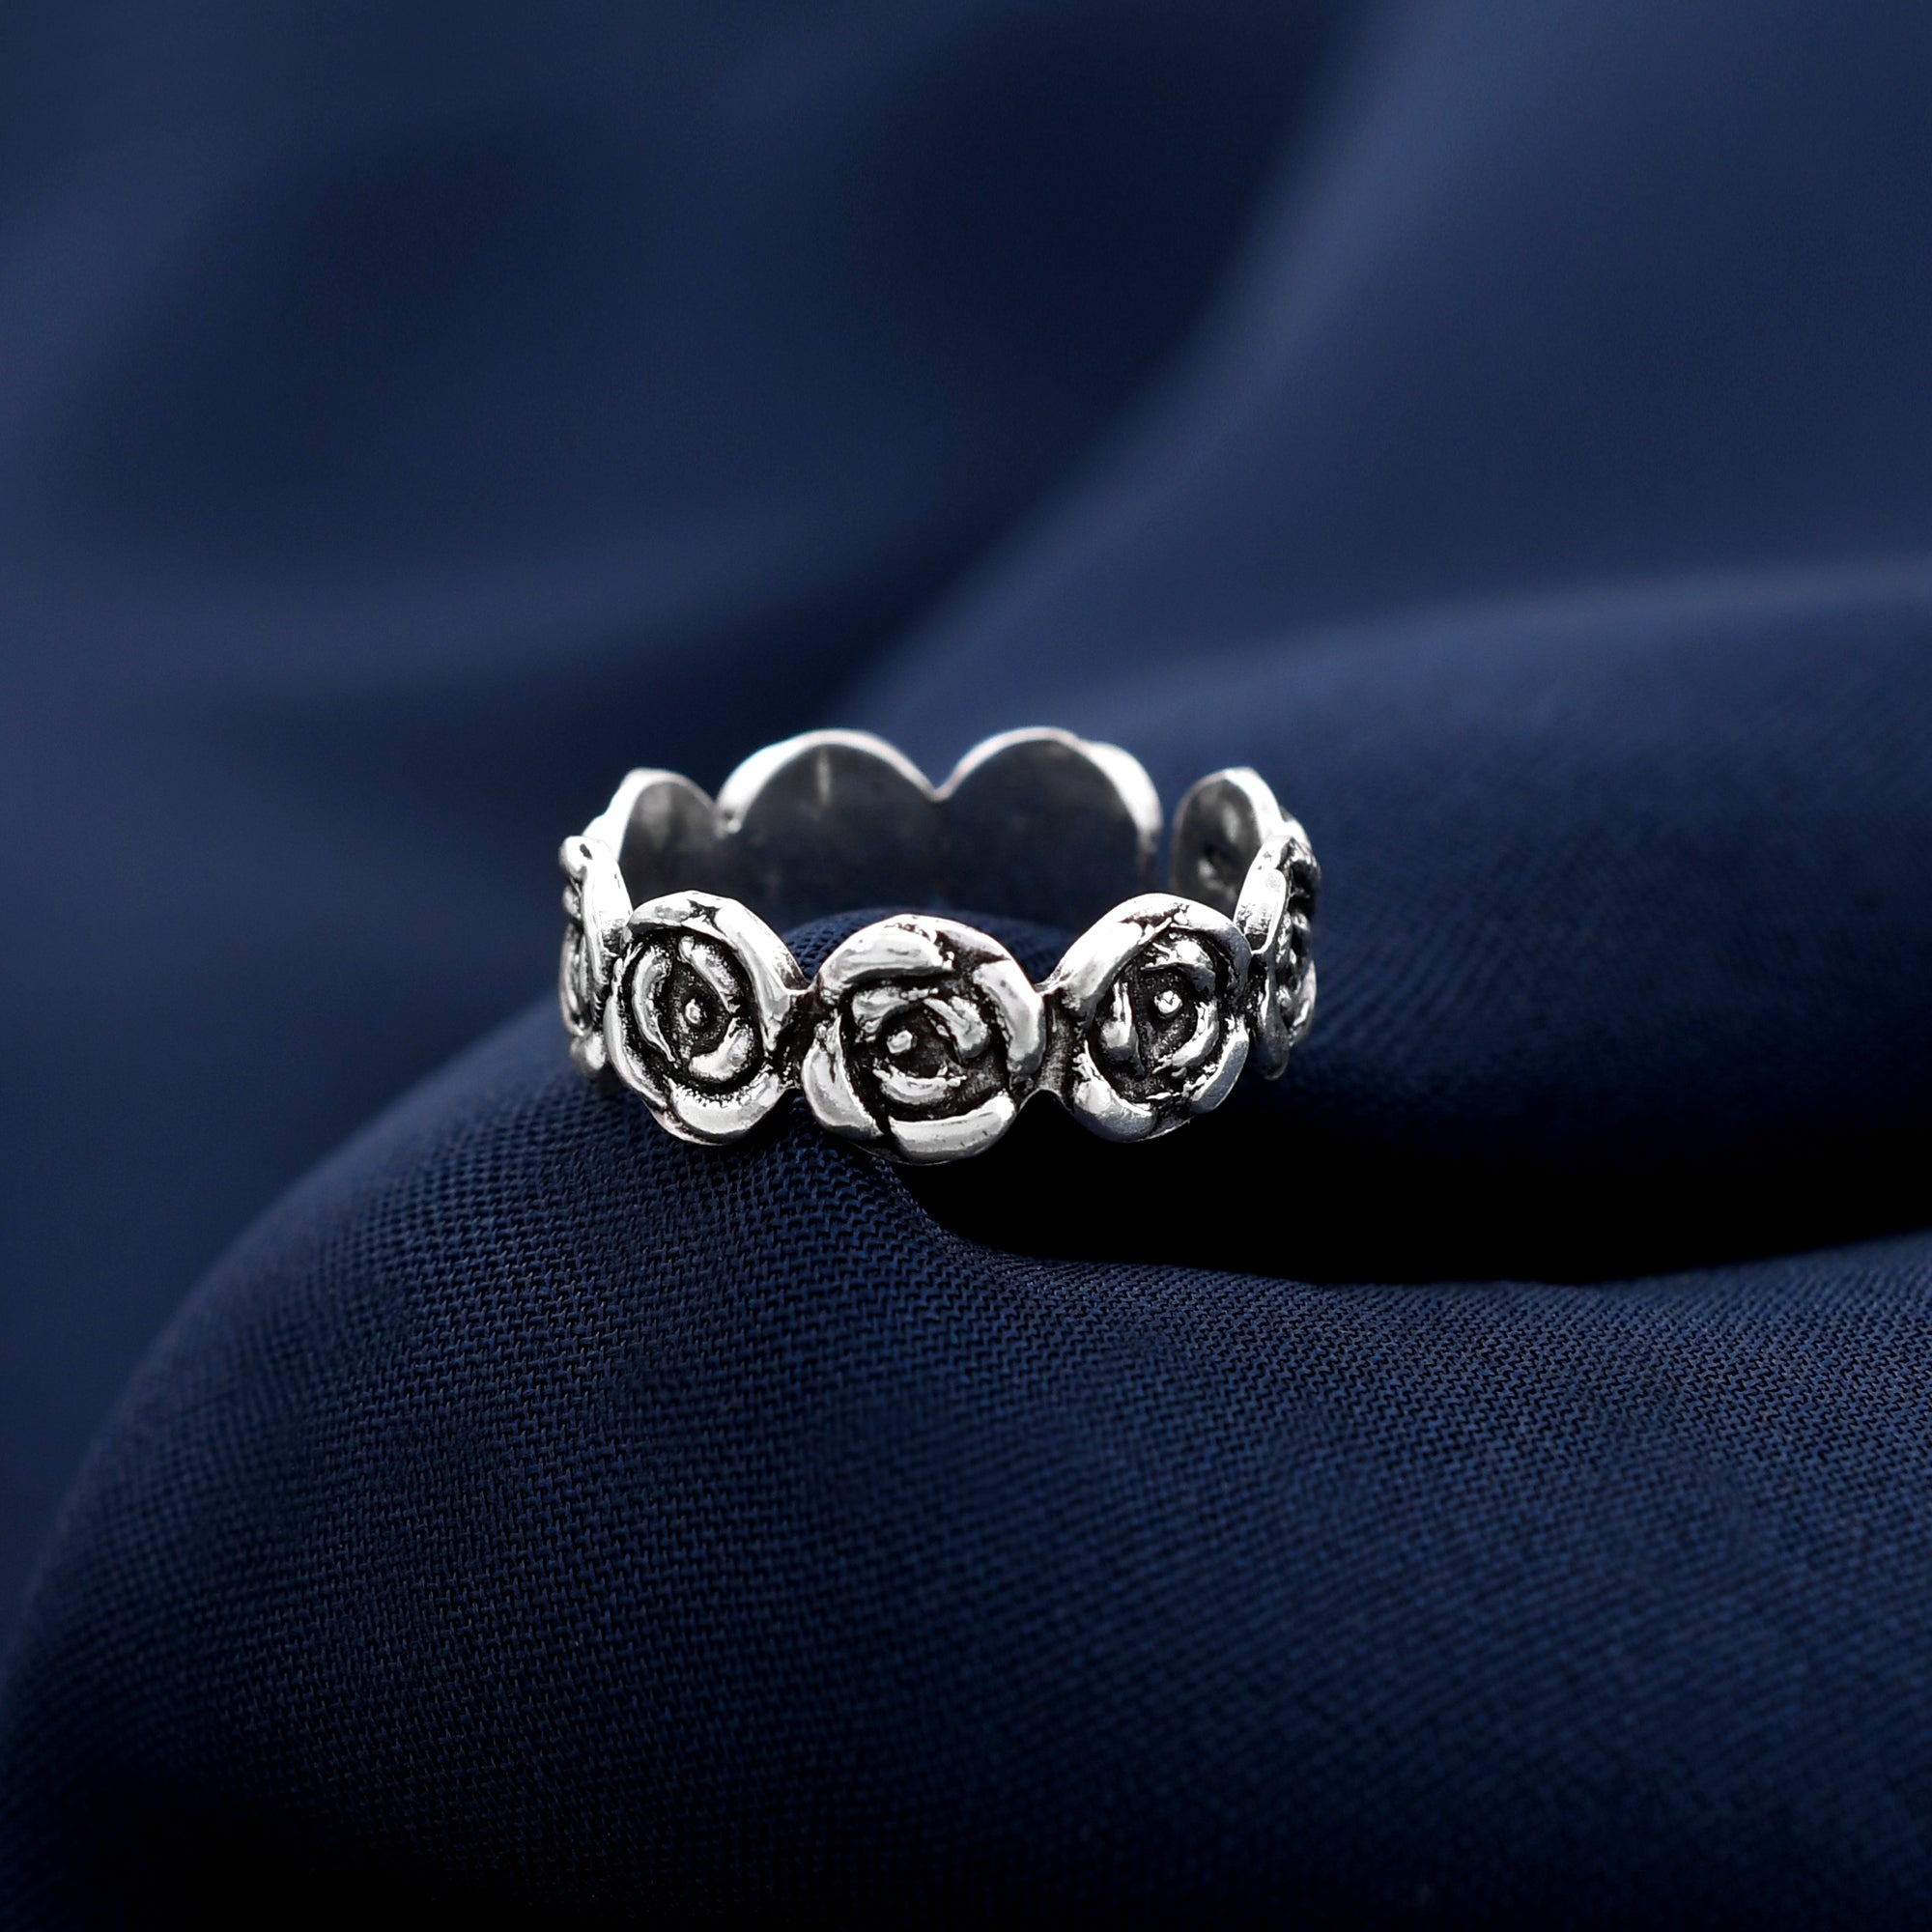 Rose Flower Design 925 Sterling Silver Toe Ring